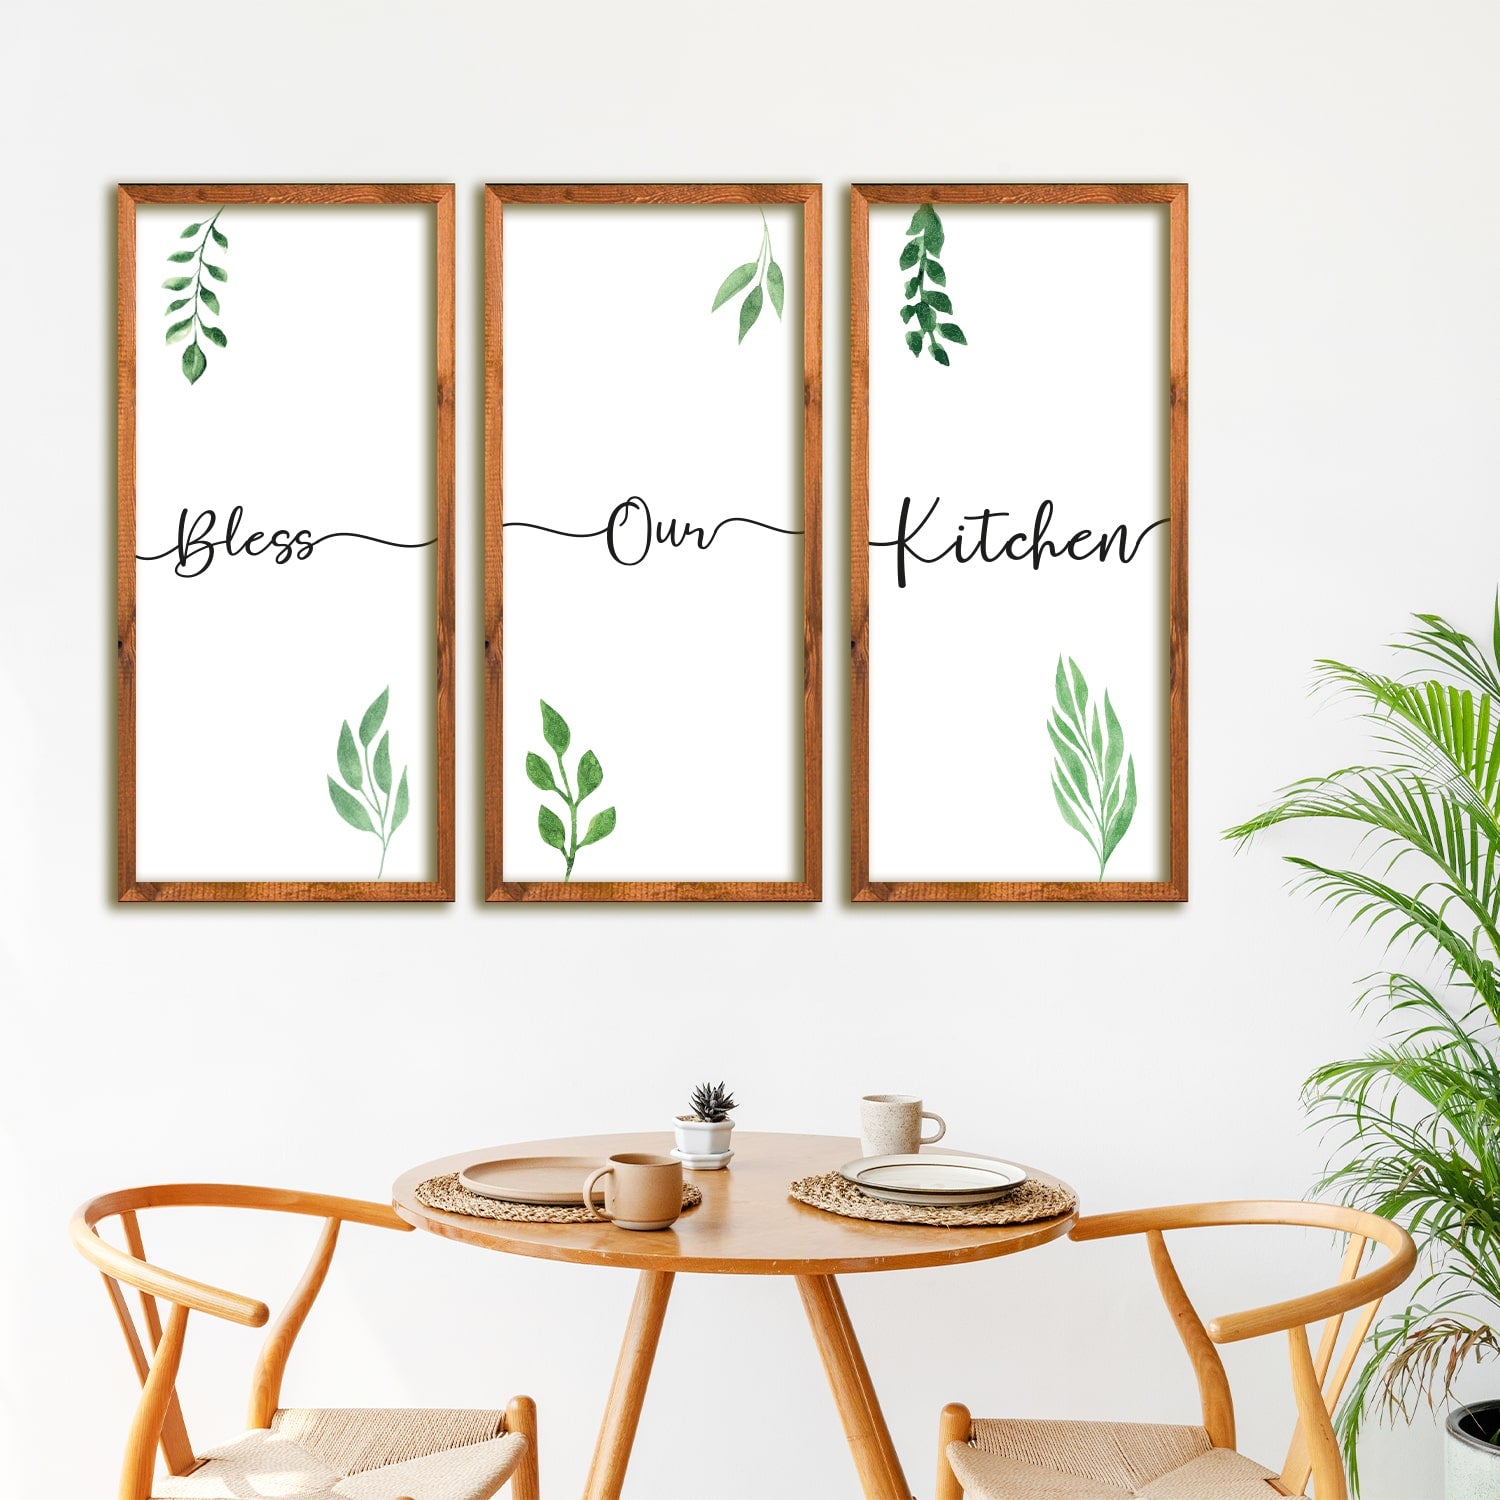 Paquete de 3 cuadros decorativos con el texto "Bless Our Kitchen"